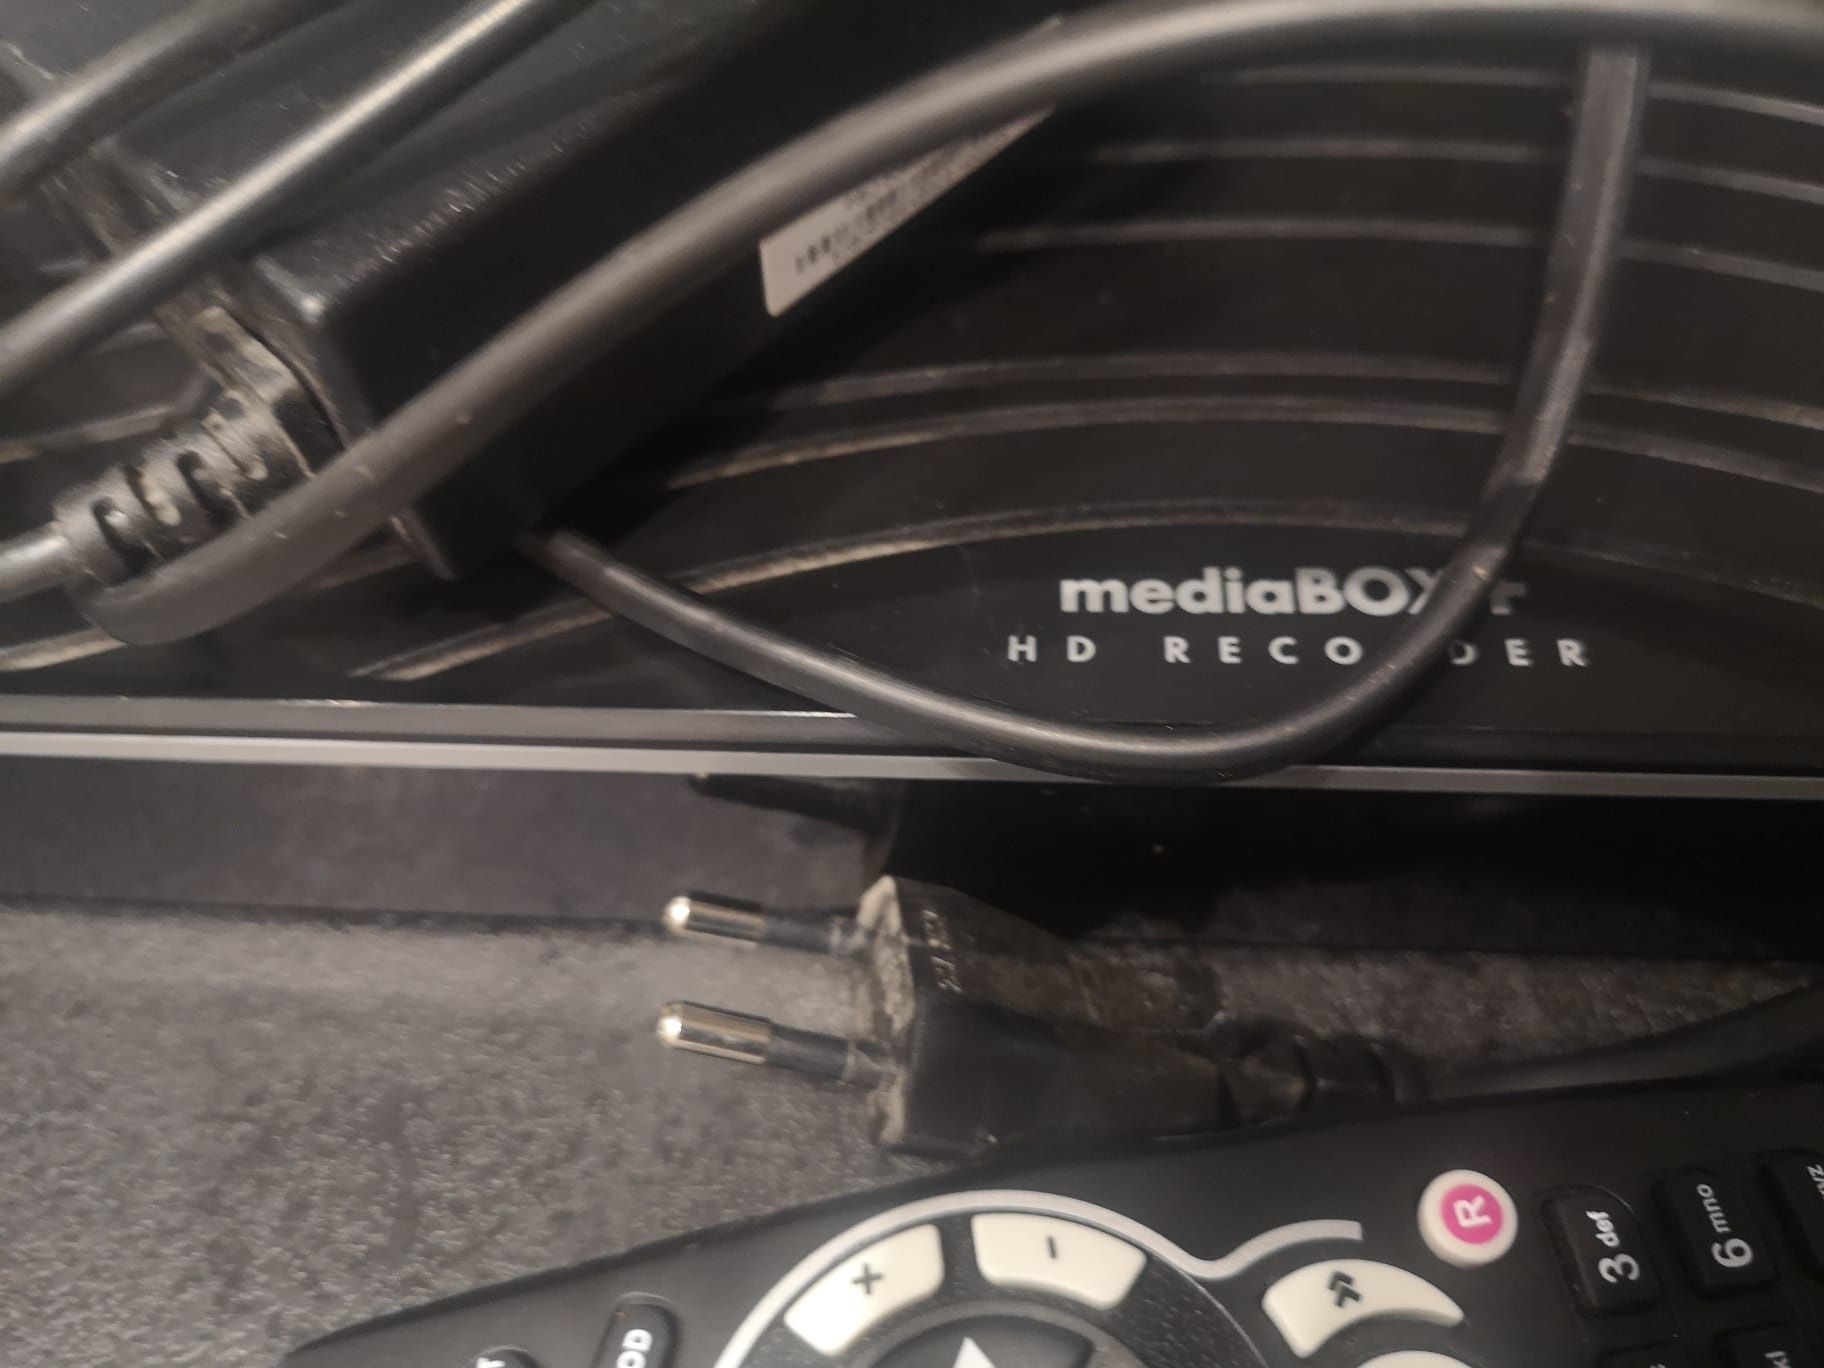 Dekoder mediabox HD recorder